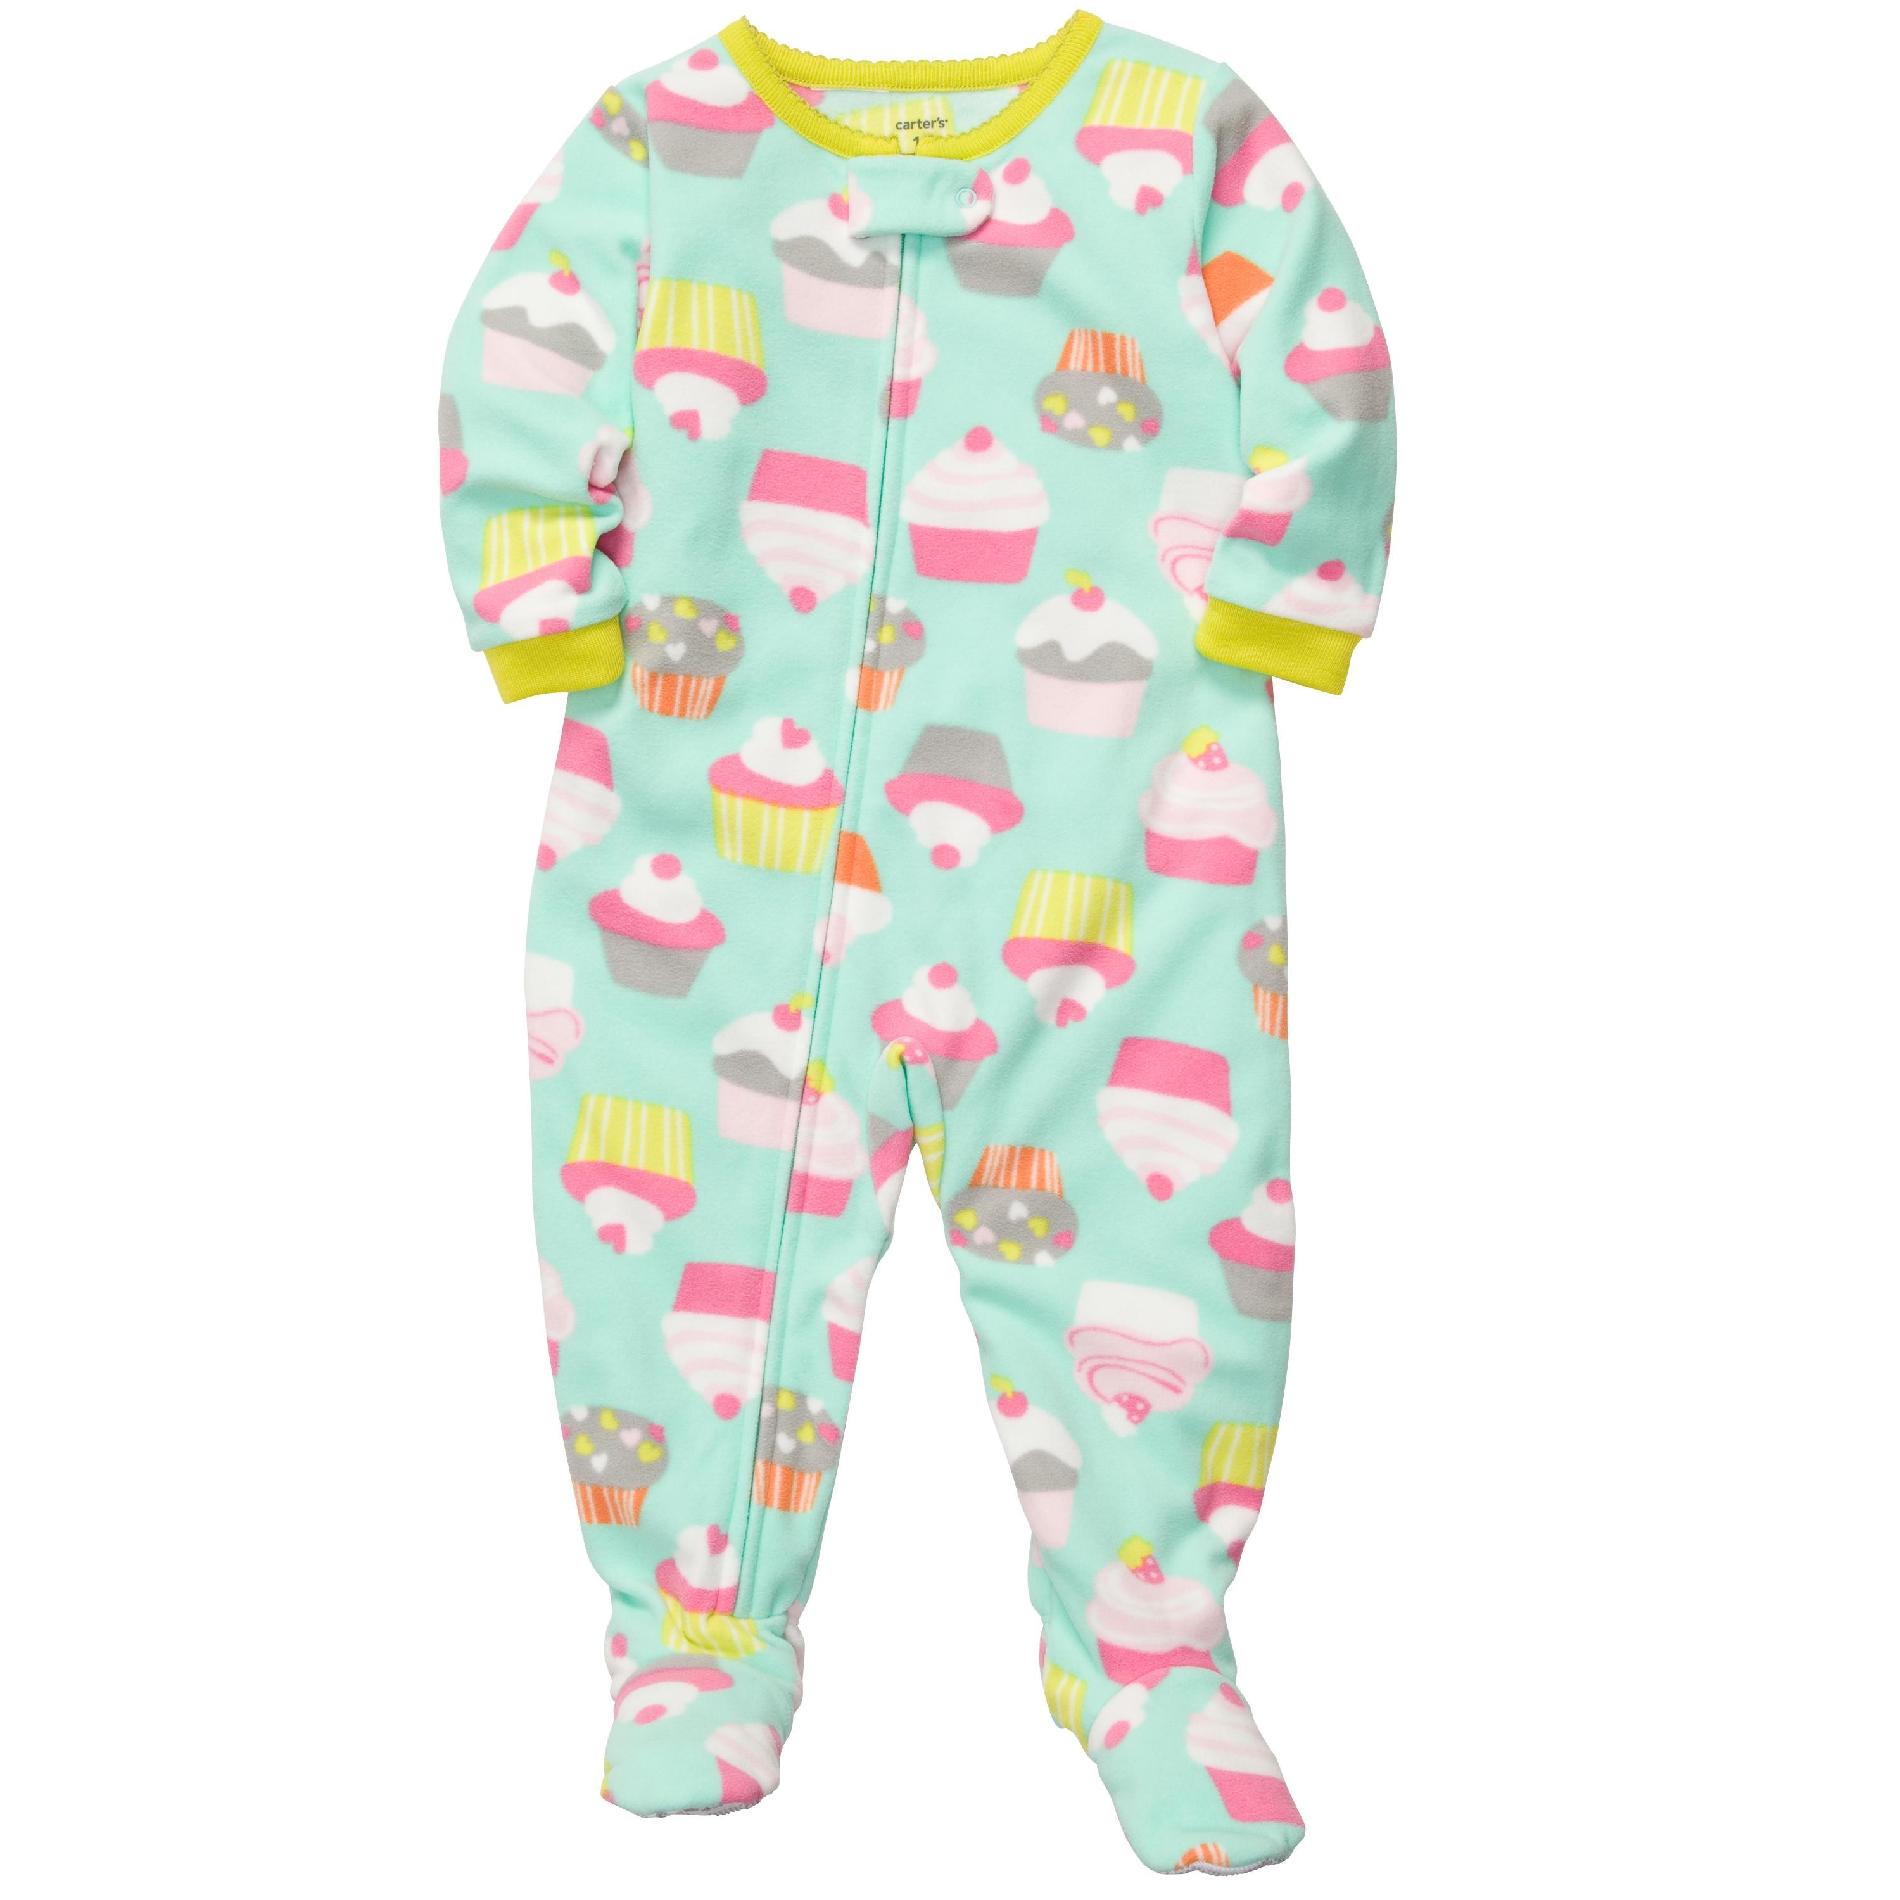 Carter's Infant & Toddler Girl's Sleeper Pajamas - Cupcakes